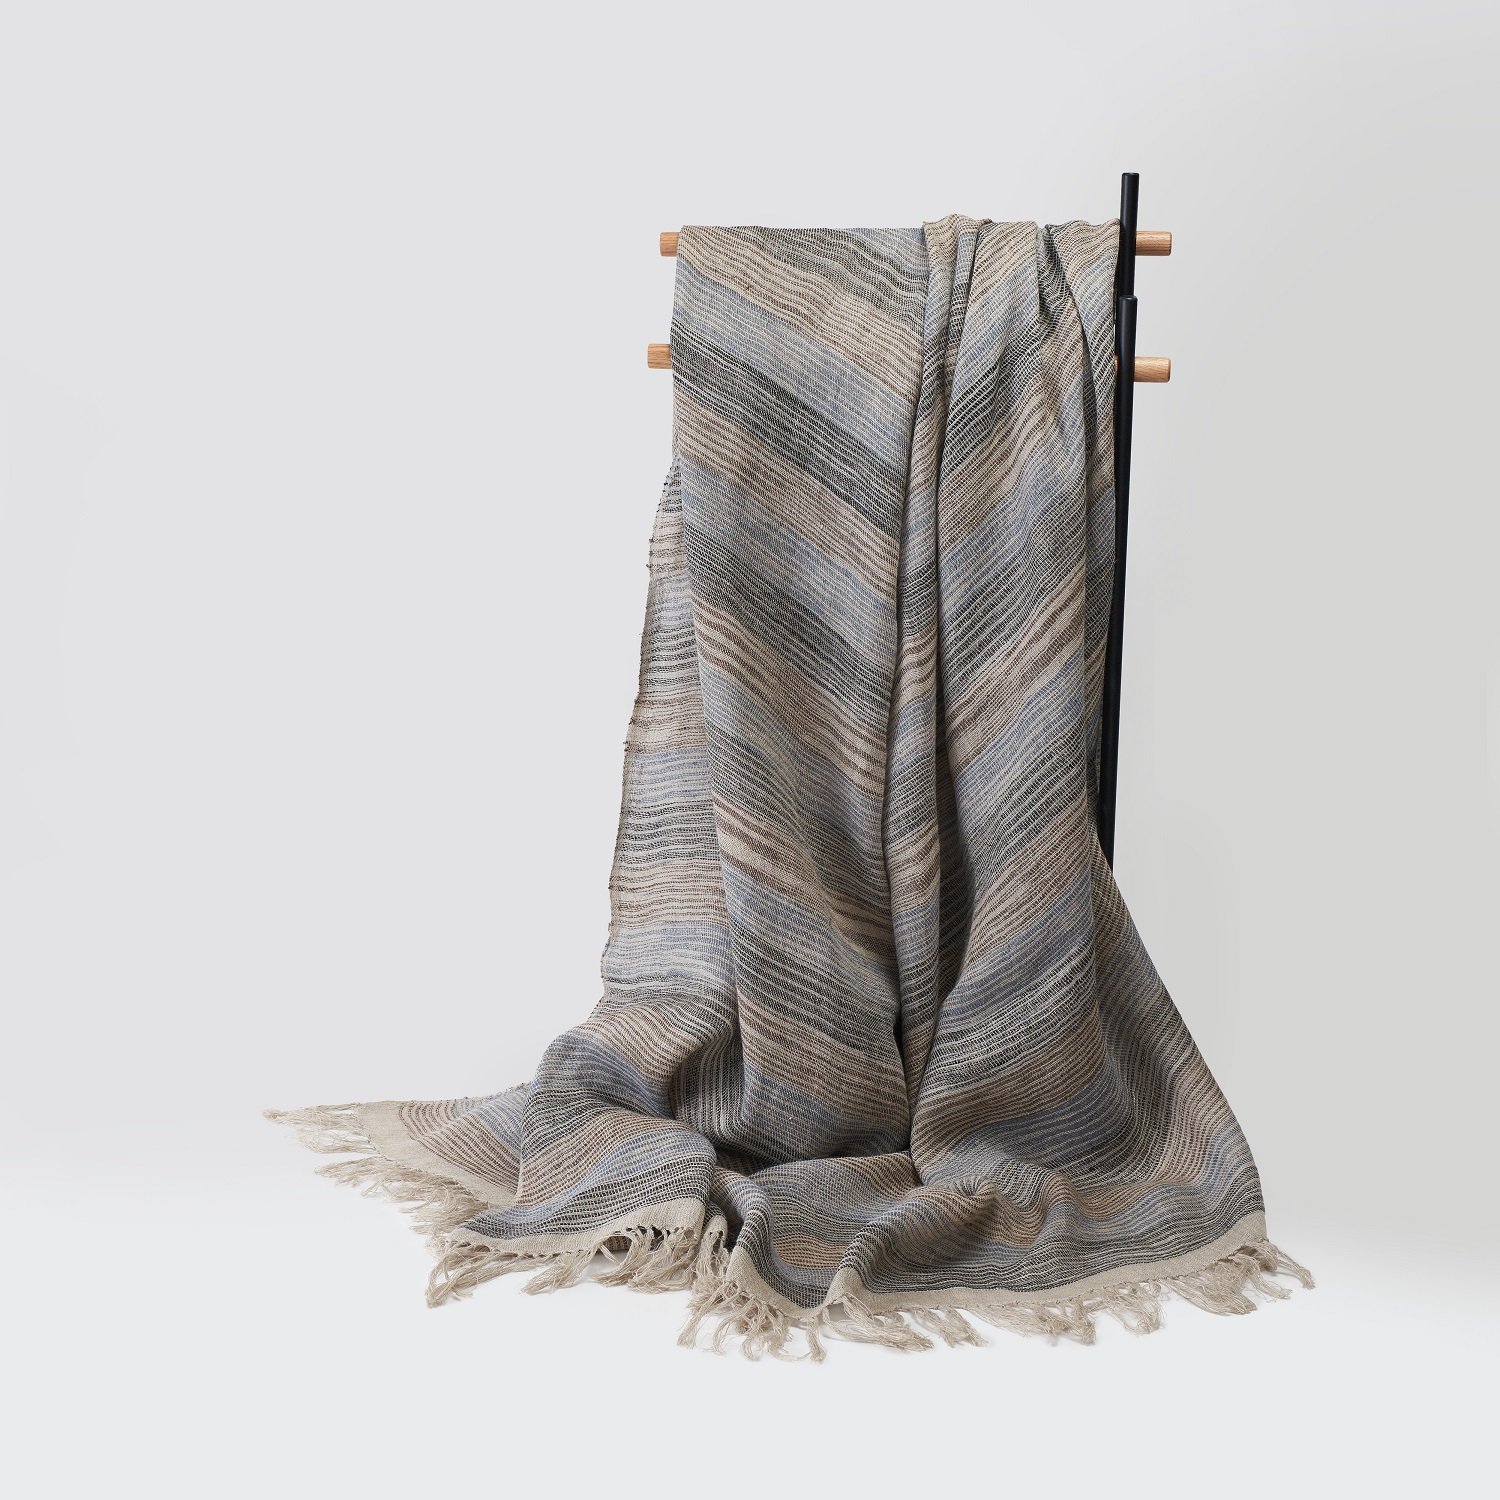 Manta 100% lana merino con flecos, tamaño 140x200cm, diseño escocés  café/crudo melange - Tienda Hohos